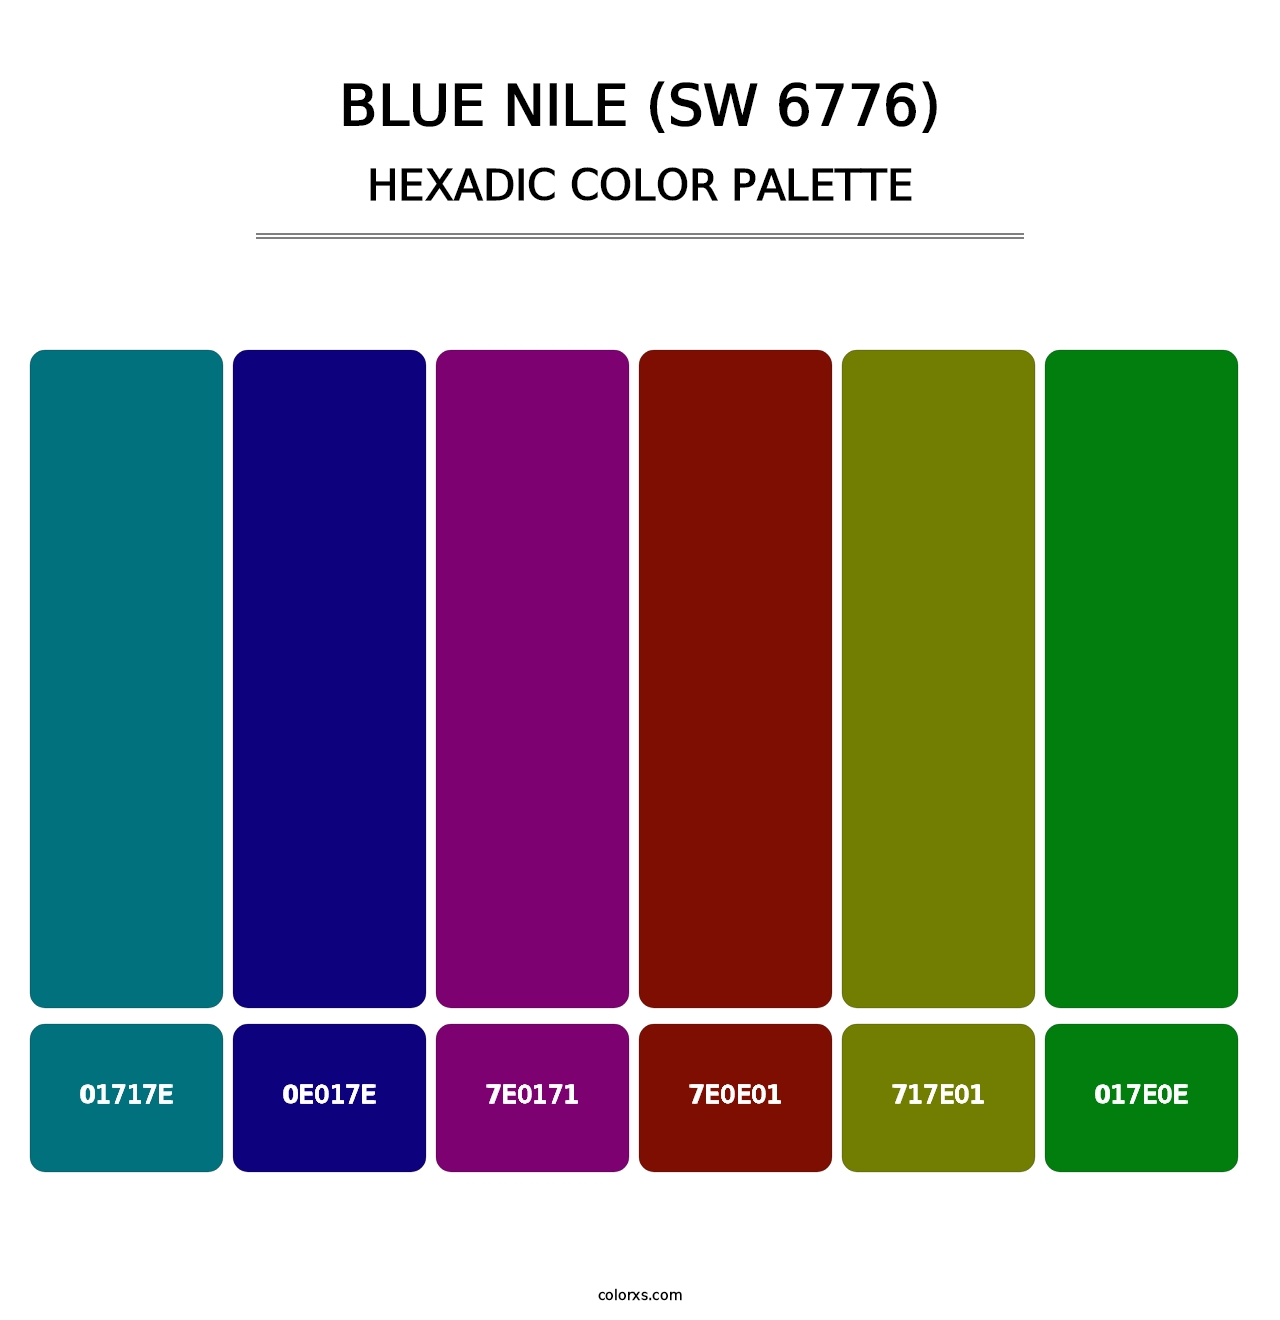 Blue Nile (SW 6776) - Hexadic Color Palette